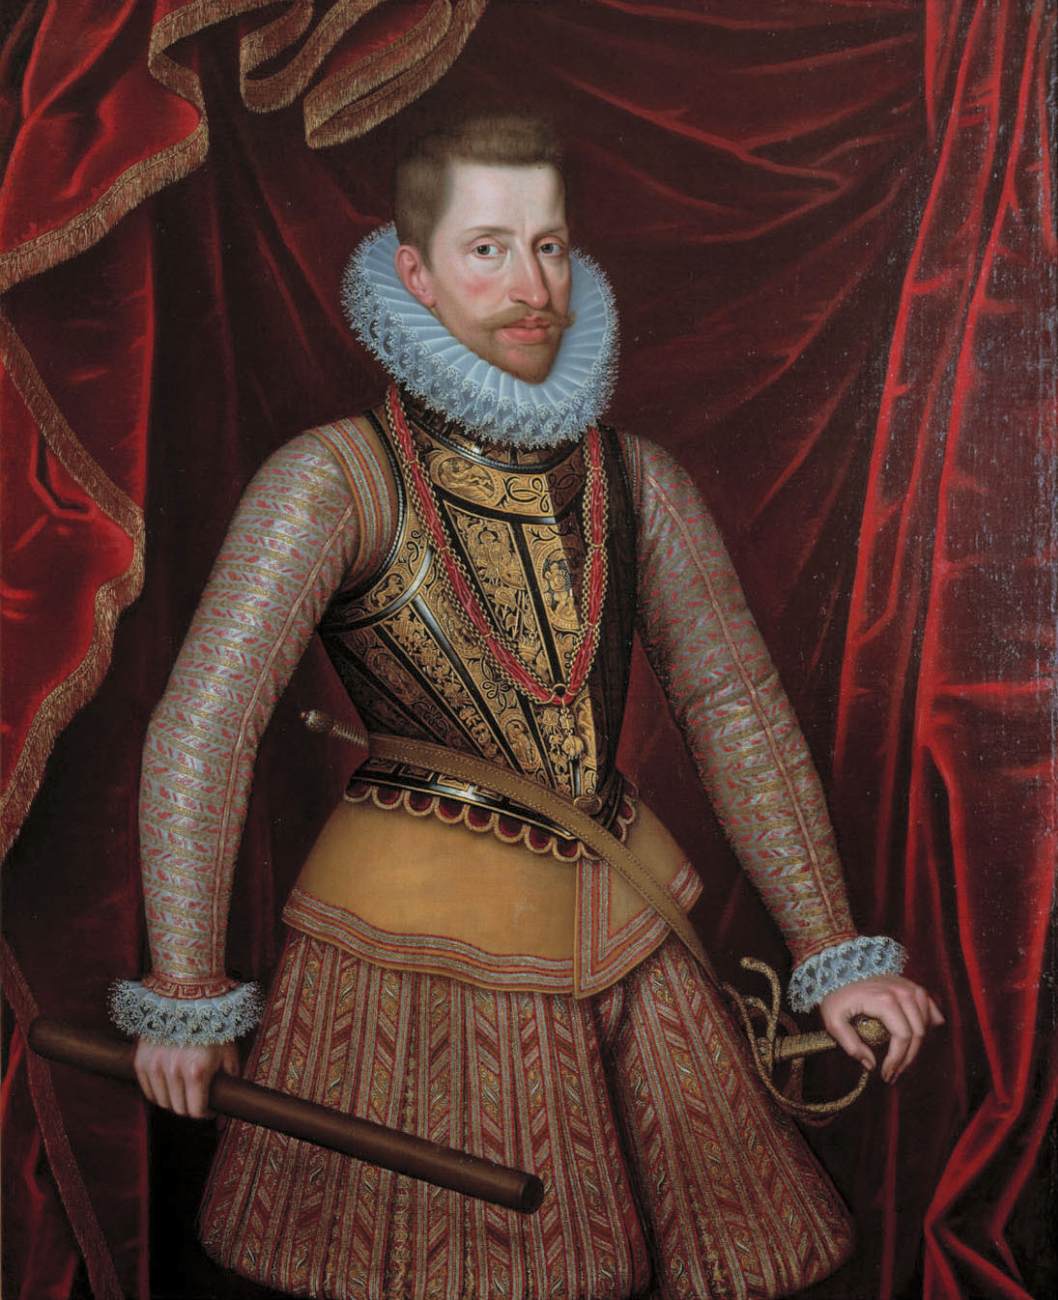 Alberto VII, Avusturya Archduke